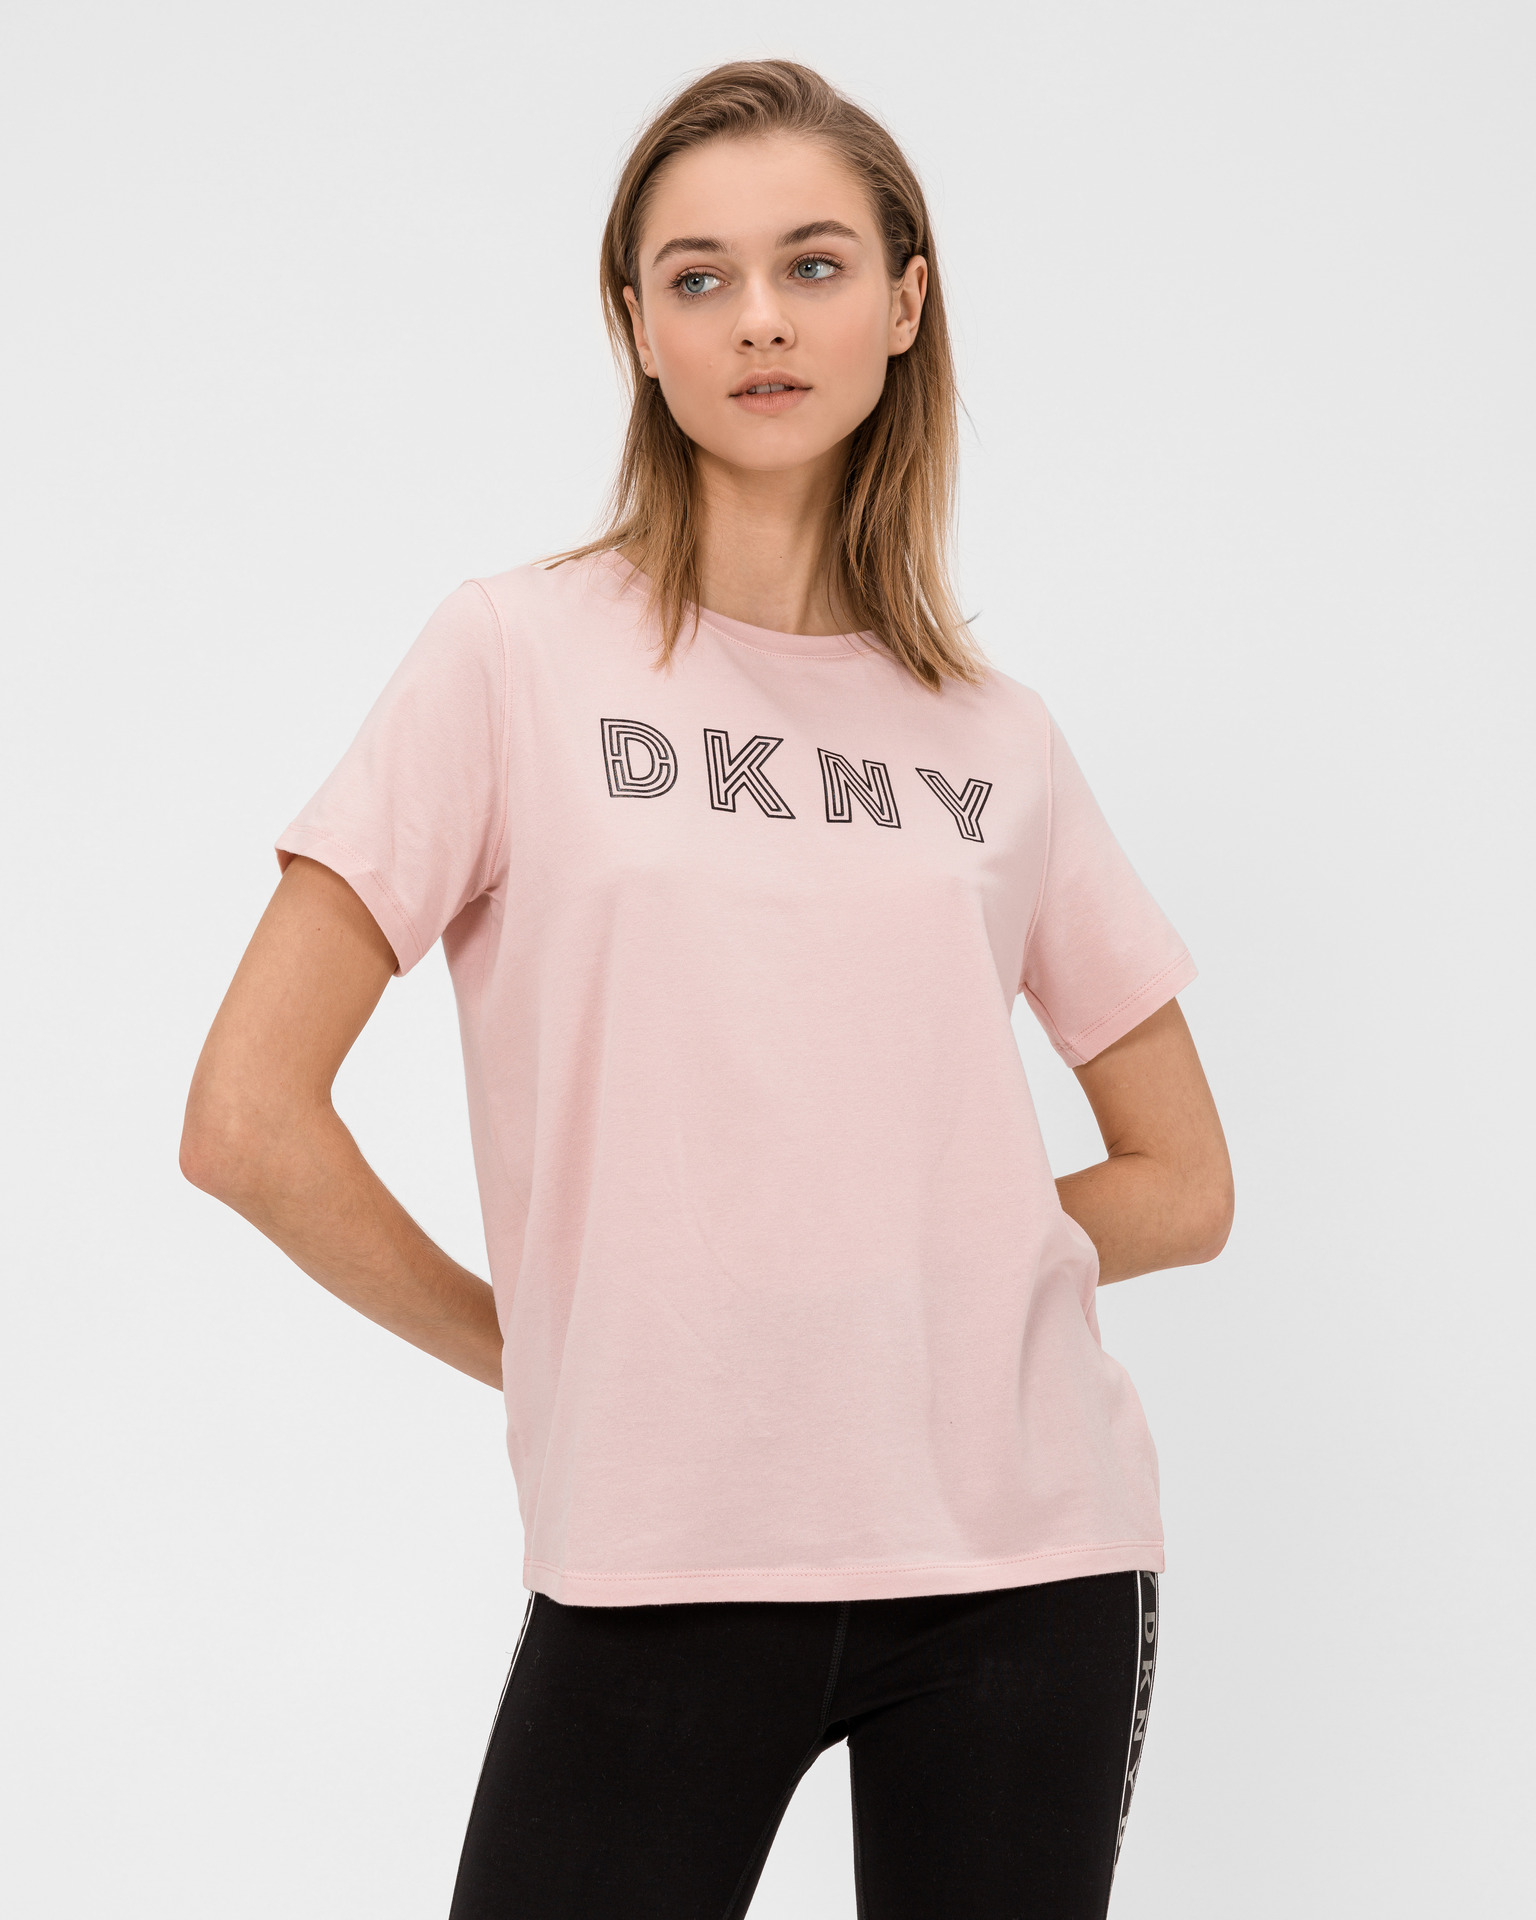 DKNY - T-shirt Bibloo.com